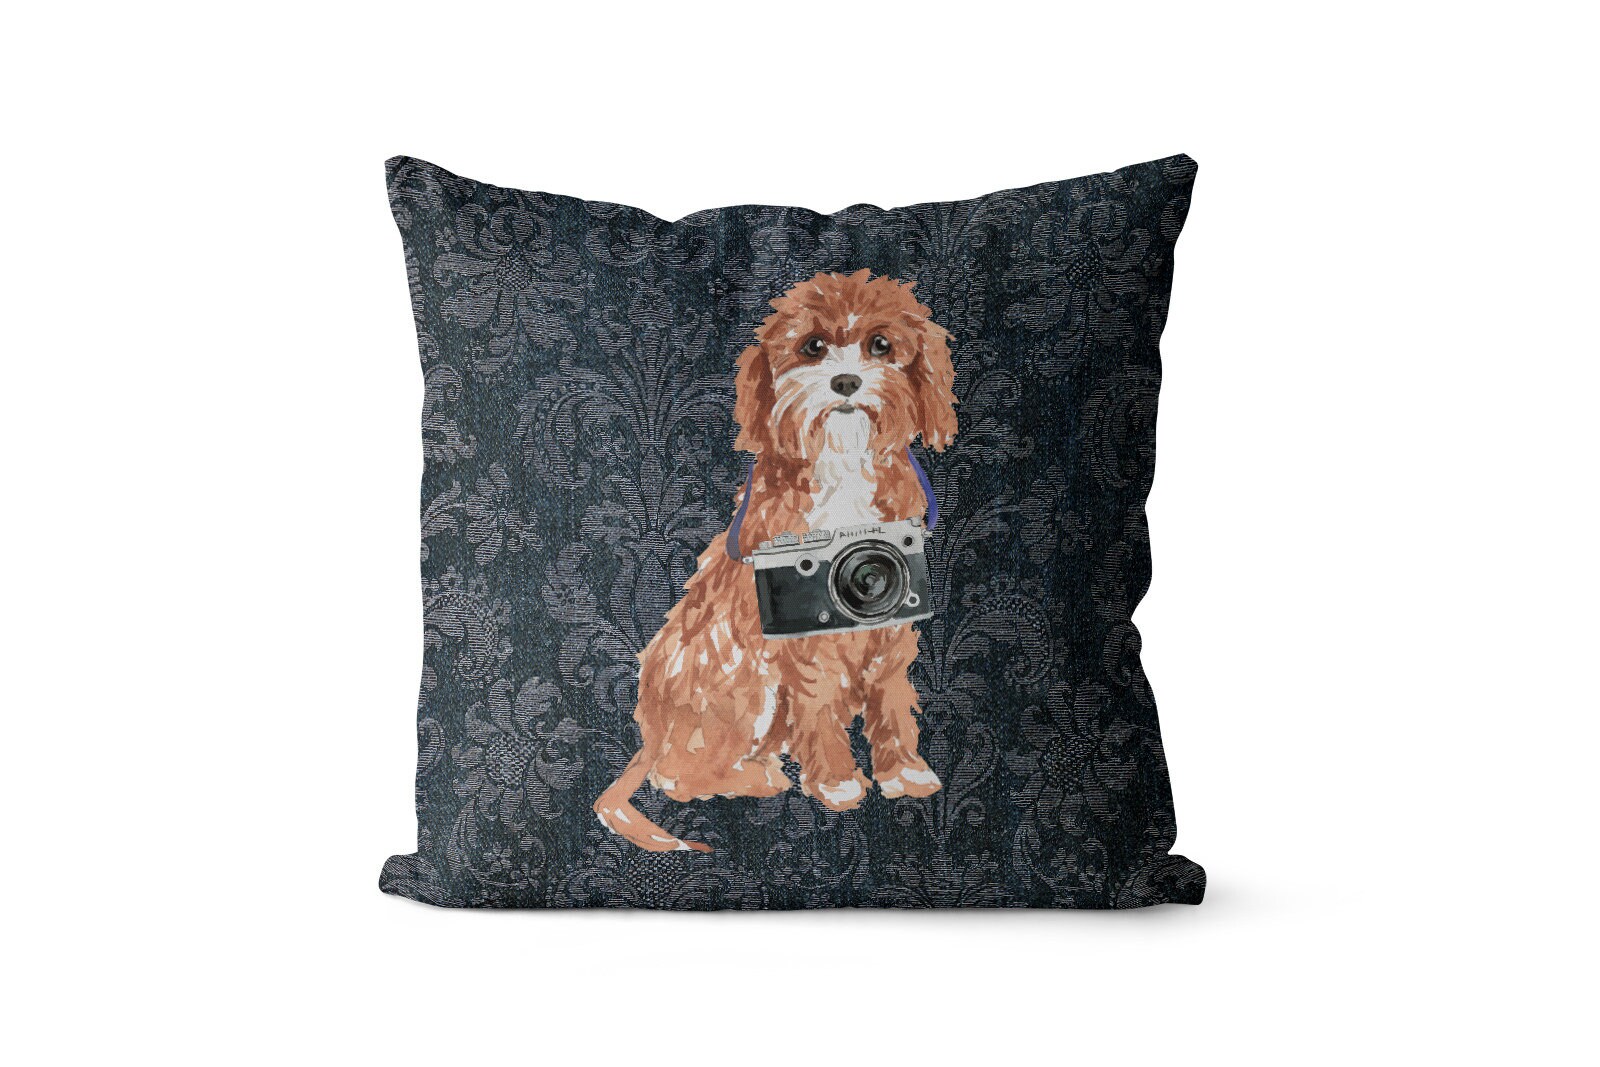 Cavapoo dog Inspired Throw Pillow Large denim style cushion | Etsy